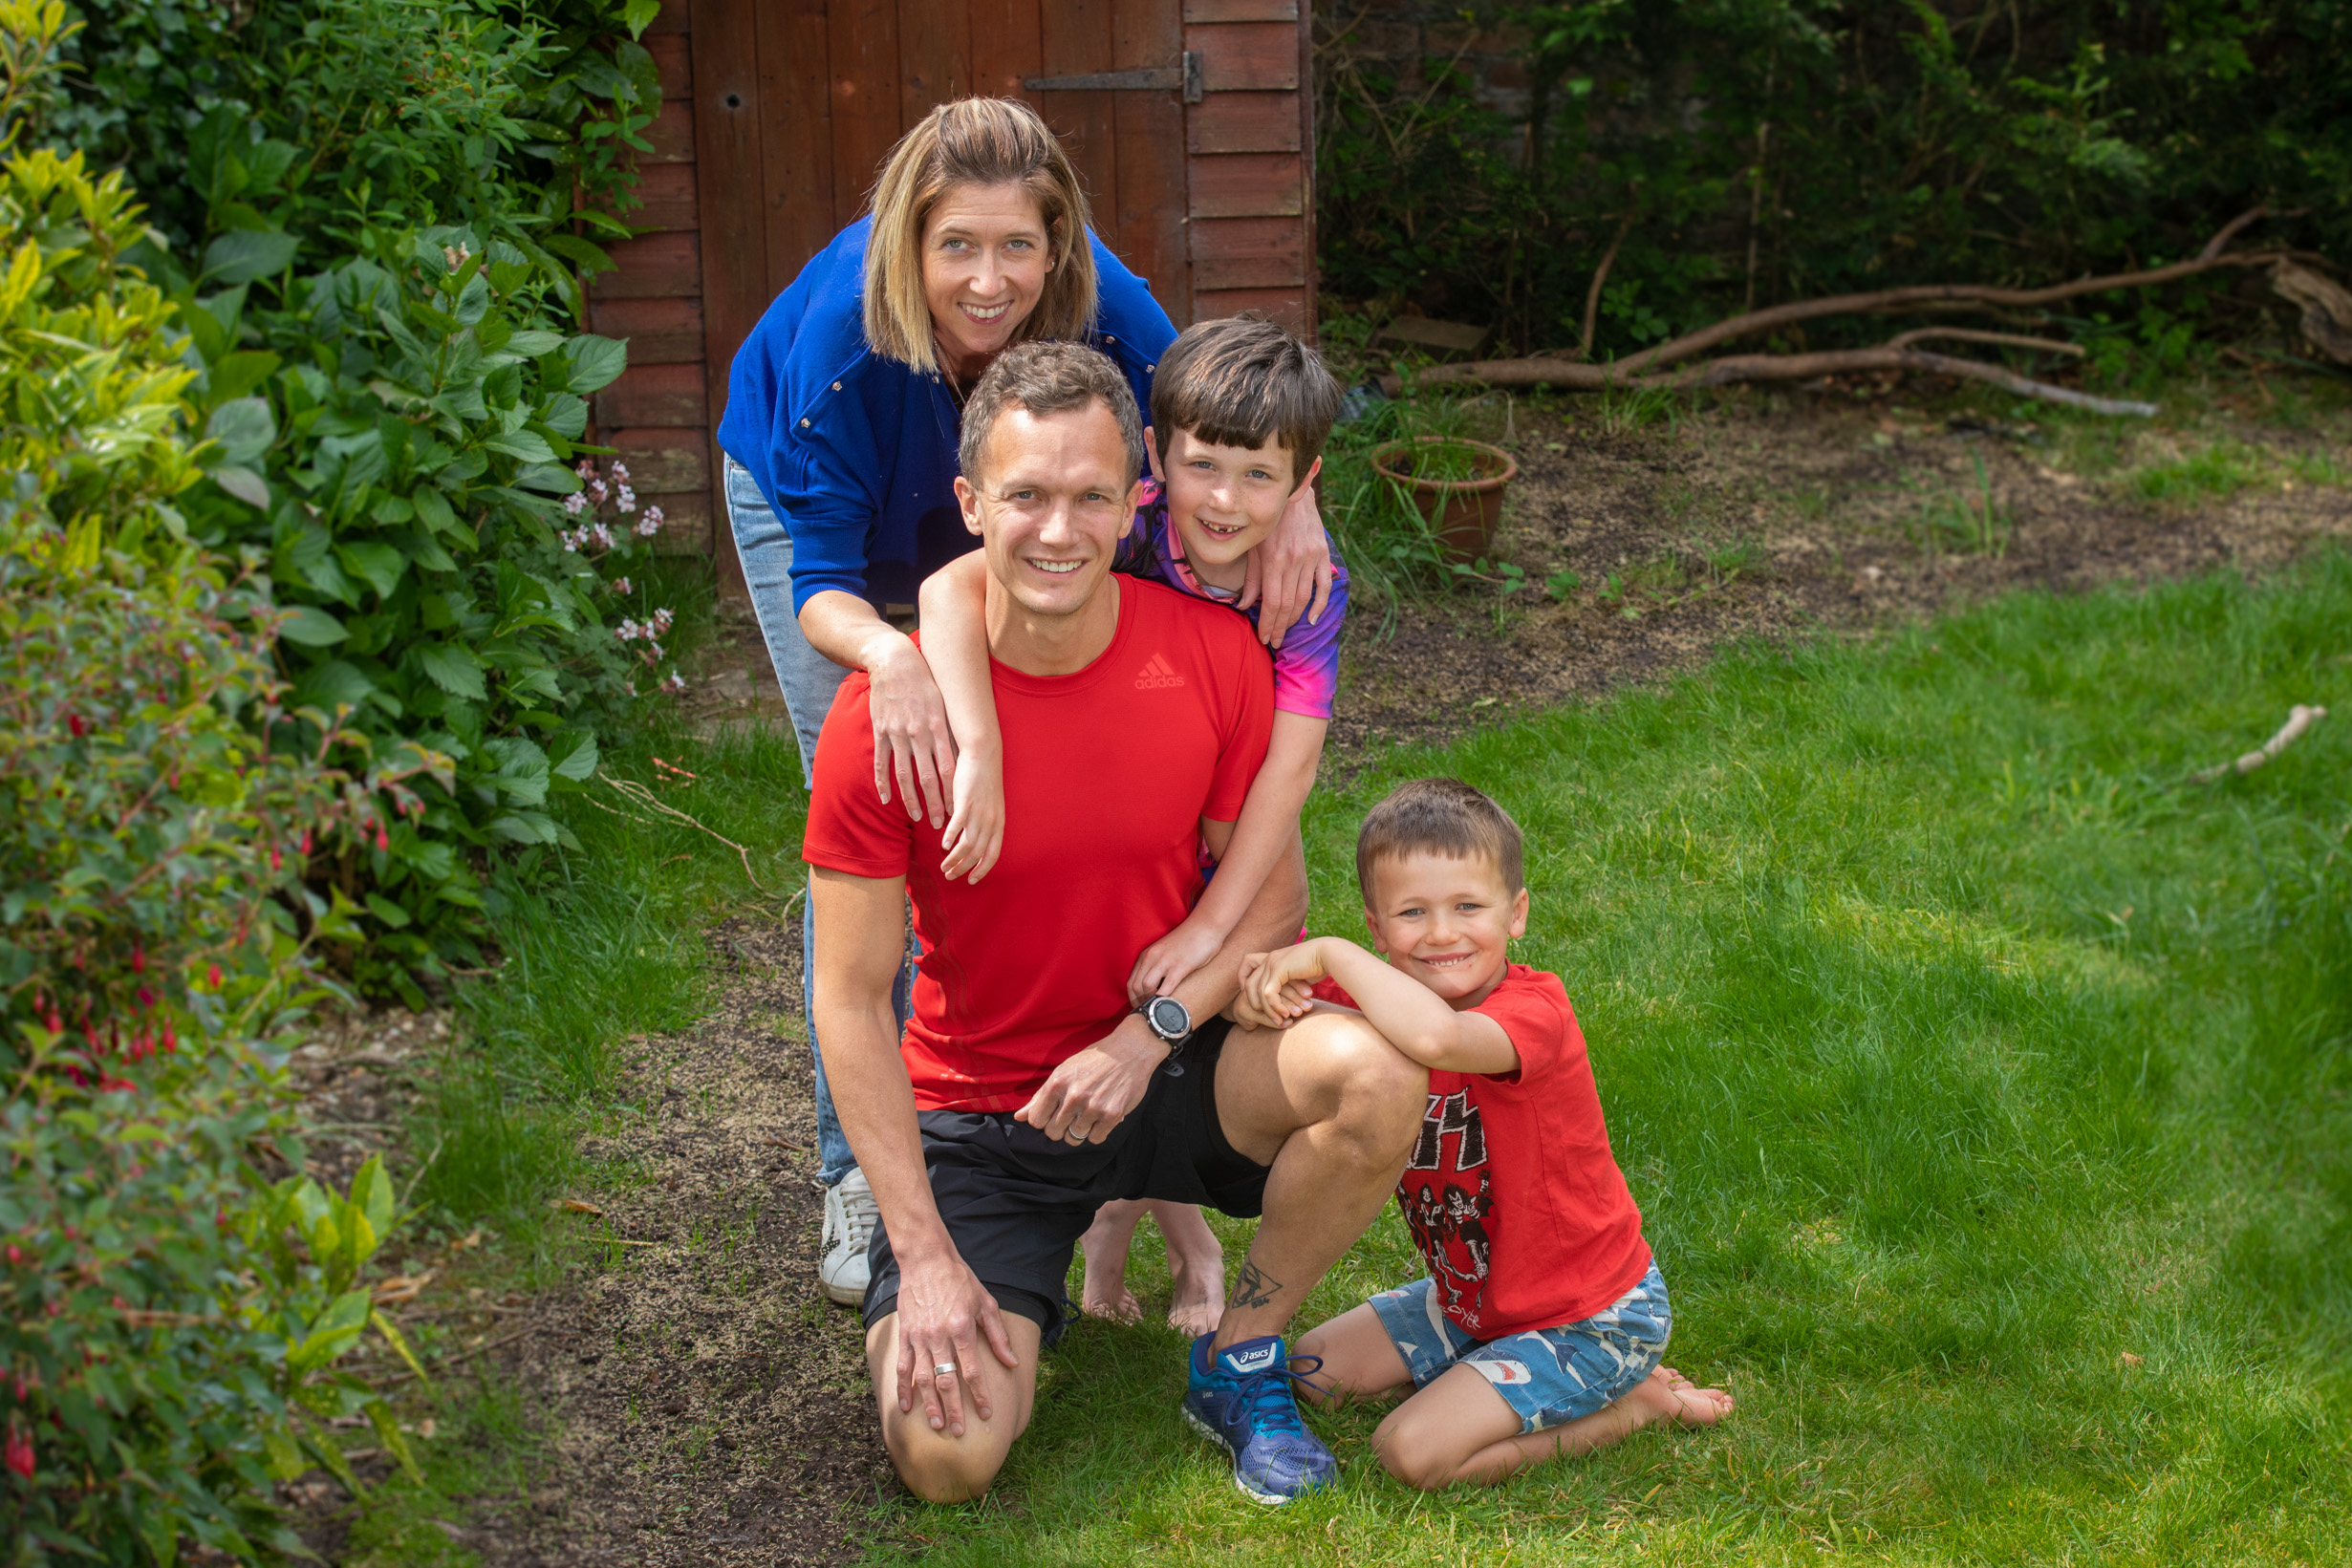 Freddie’s back garden ultra-marathon raises over £2,000 for NHS charity